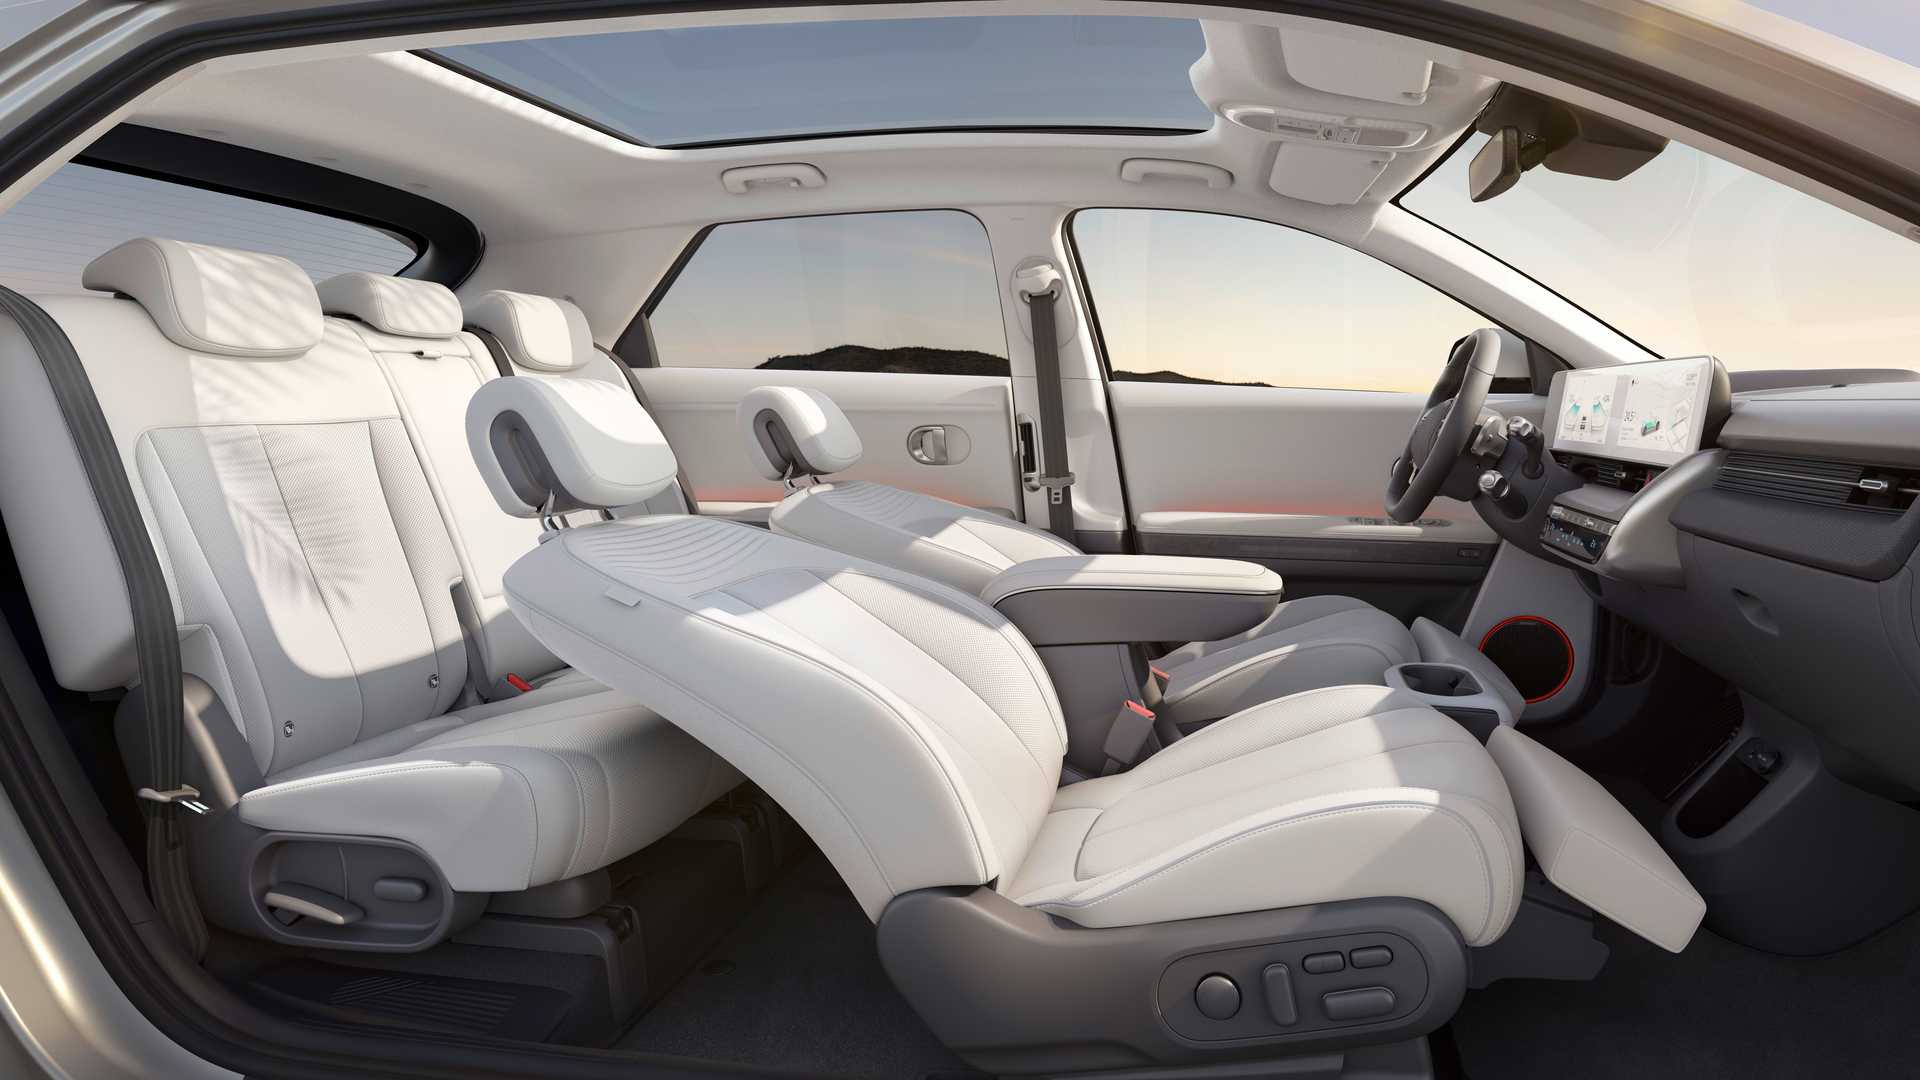 Hyundai Ioniq 5 interior extensively detailed on video